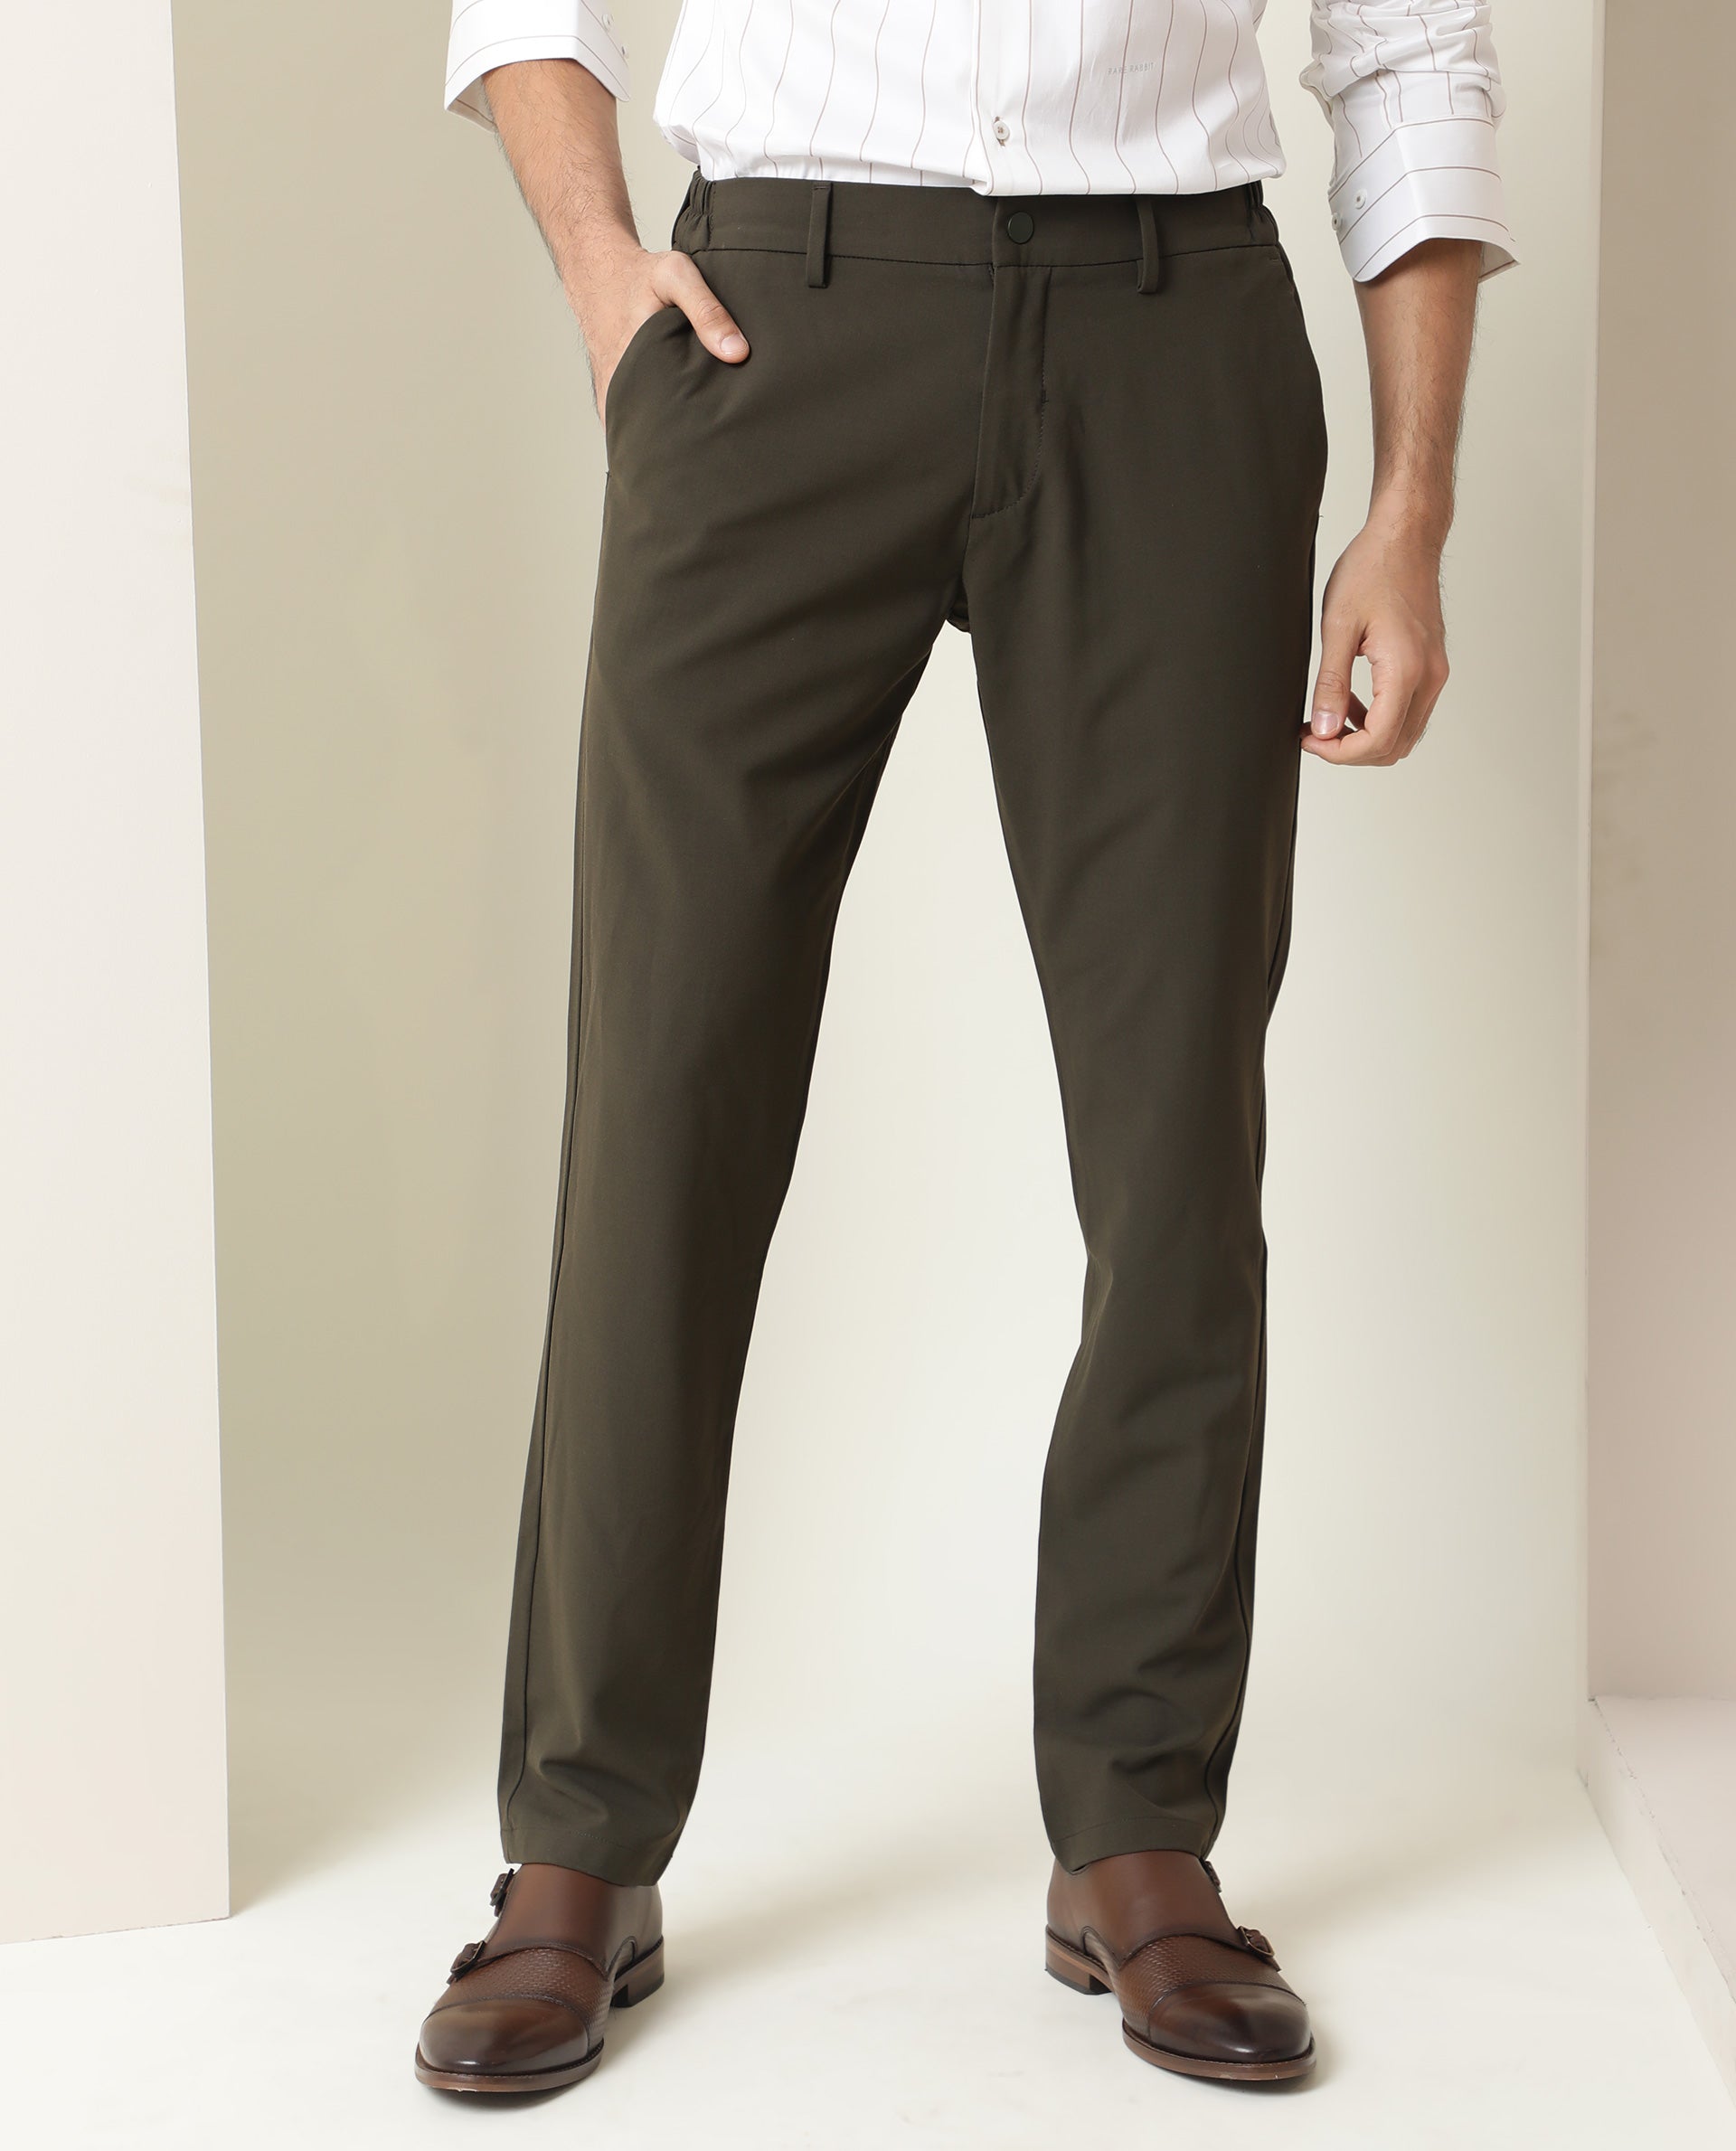 4-Way Stretch Formal Trousers in Tan Khaki- Slim Fit